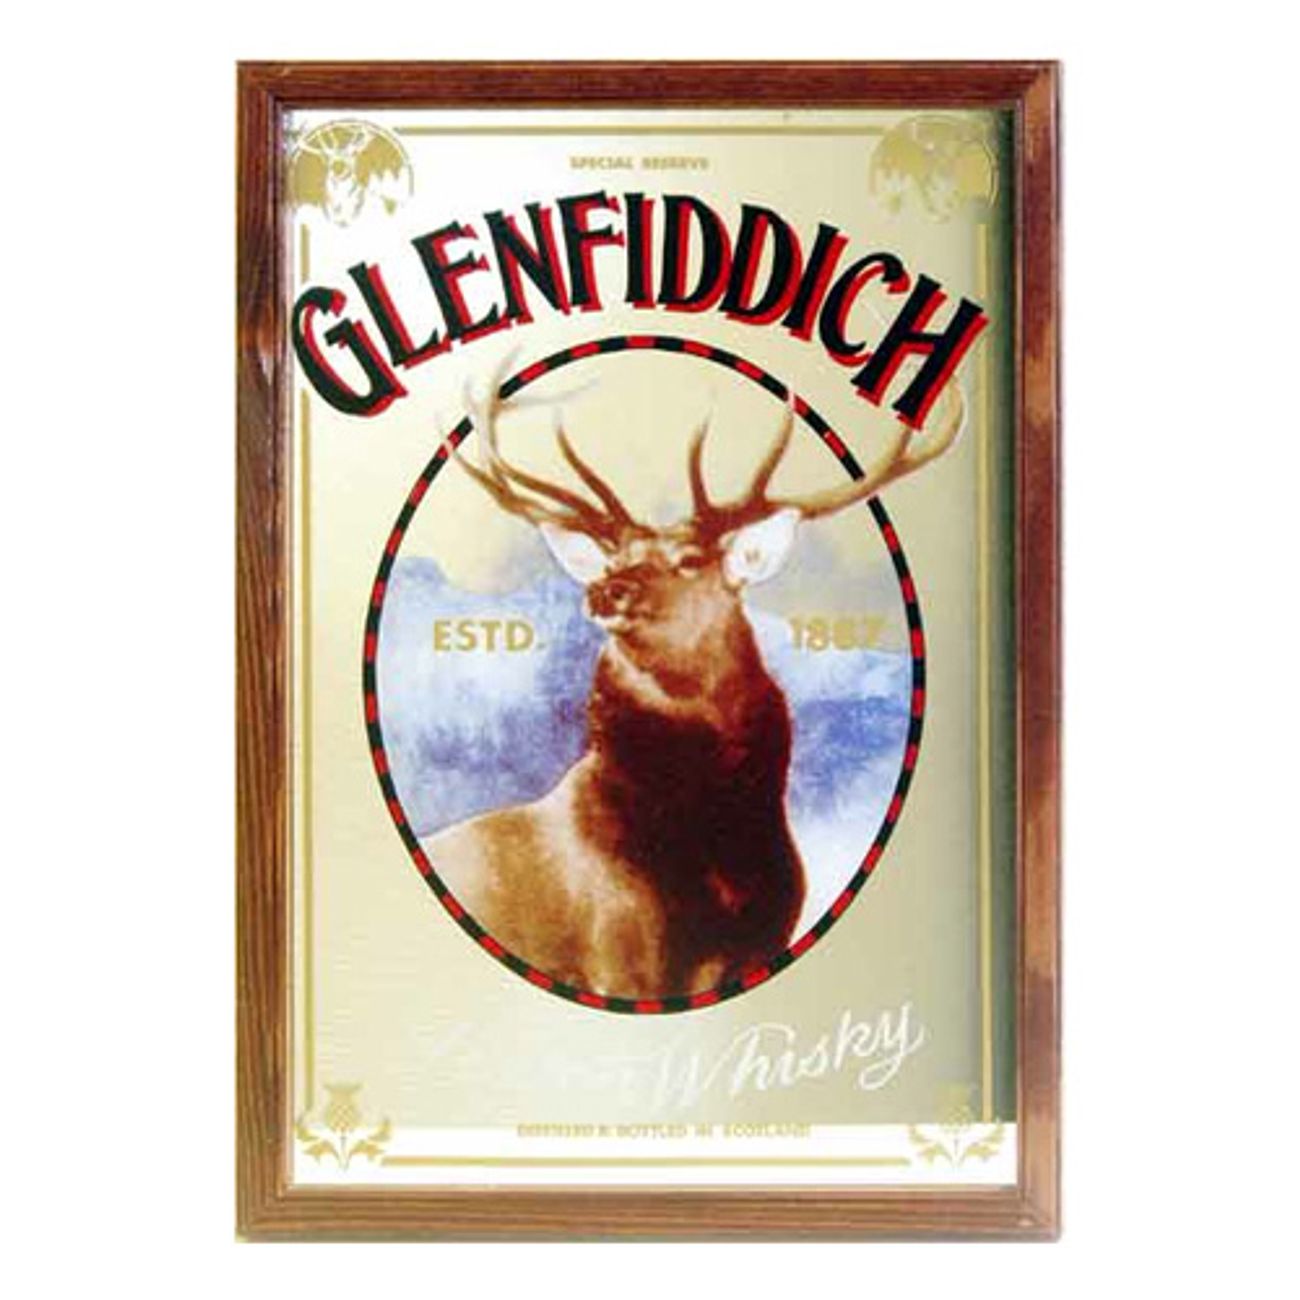 barspegel-glenfiddich-1